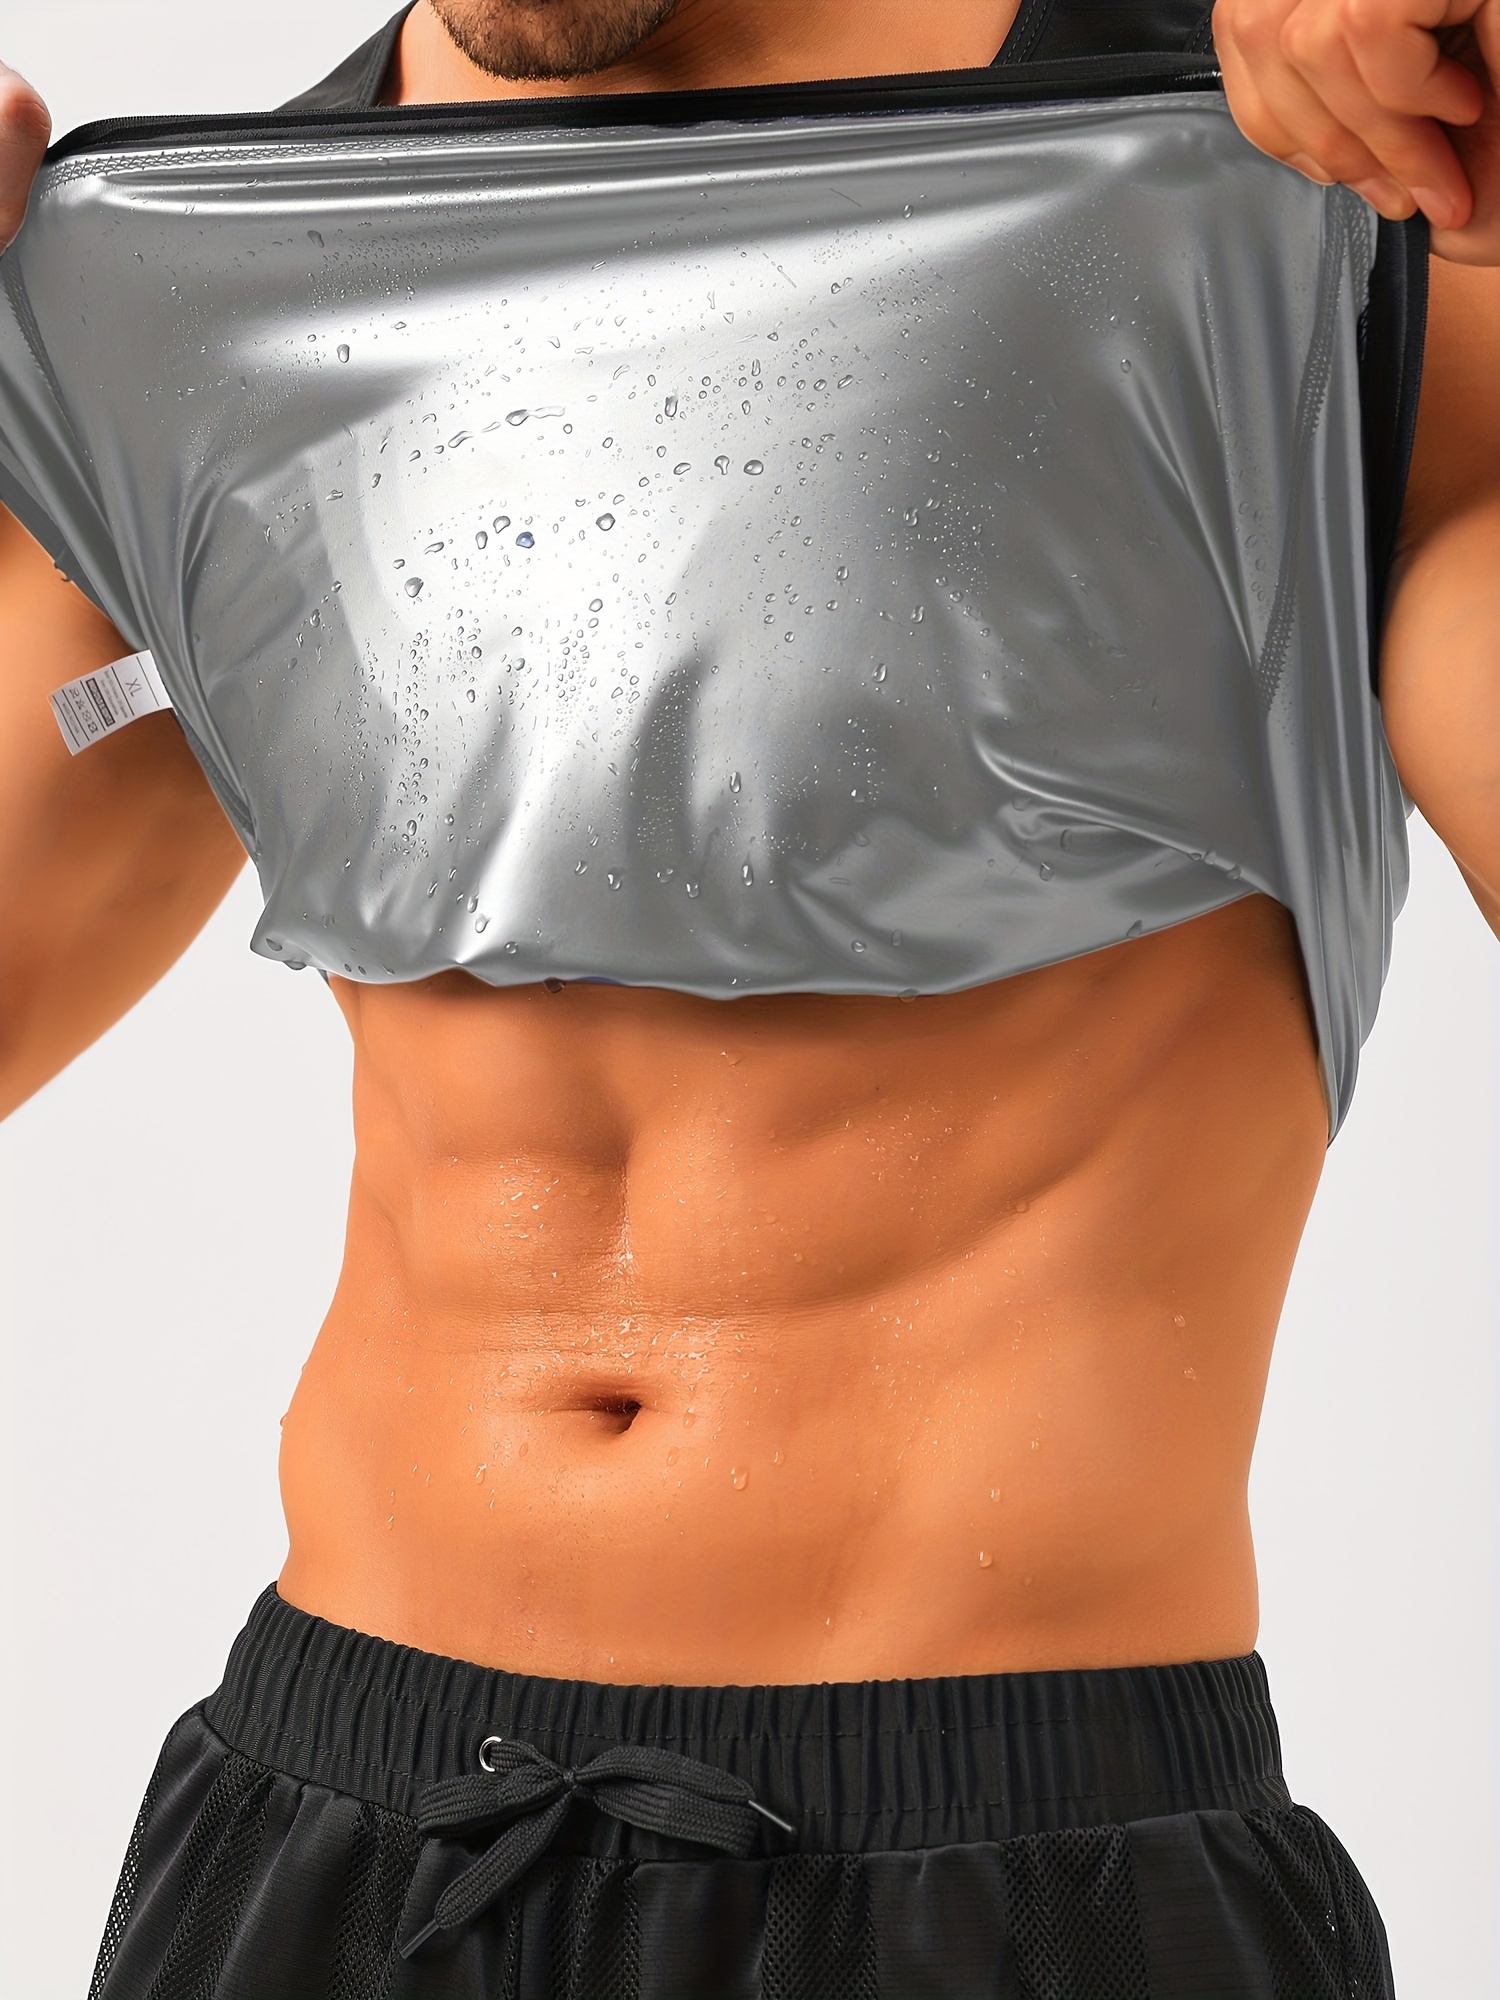 Larry&Marry Men's Heat Trapping Shirt Sweat Body Shaper Vest